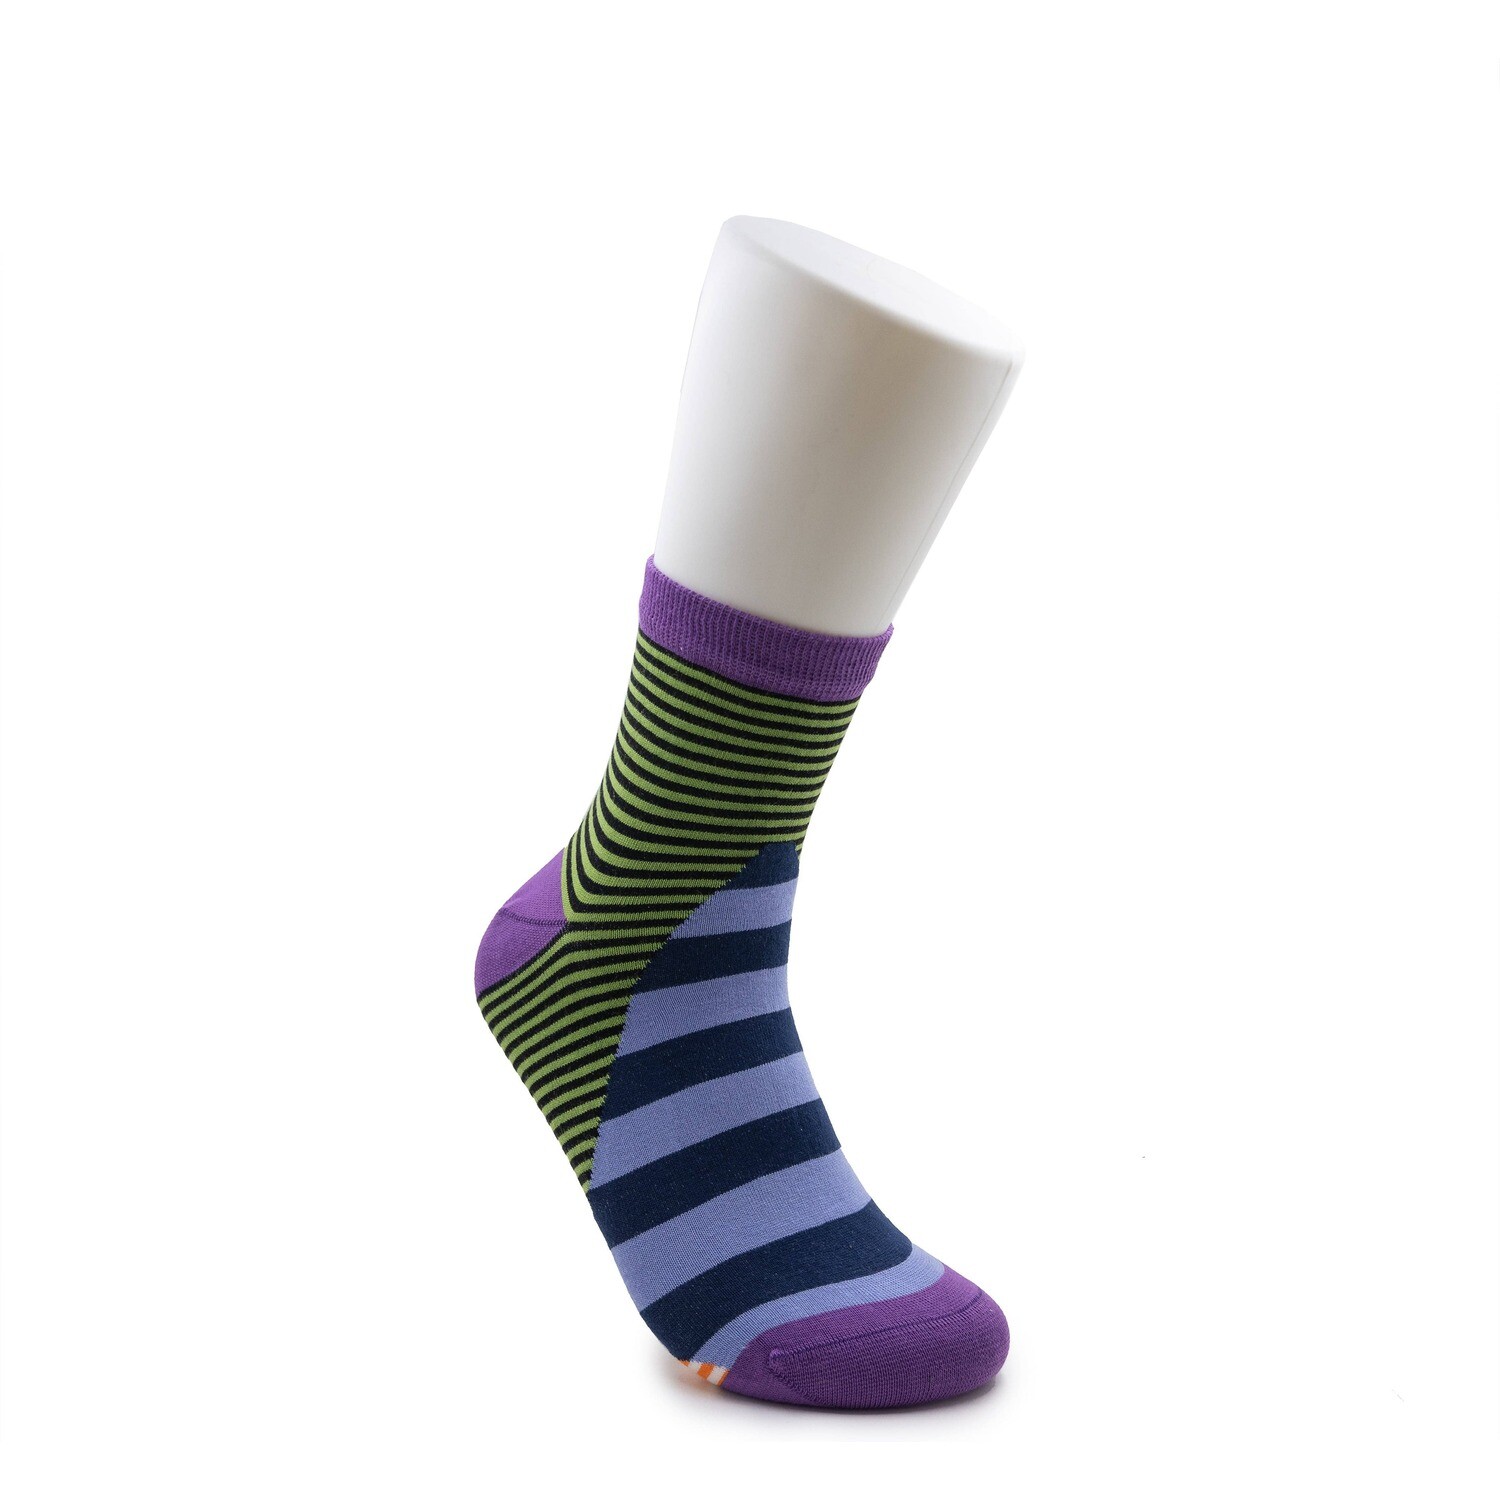 Osorno Half Crew Socks - Men's 5-9 or Women's 6-10